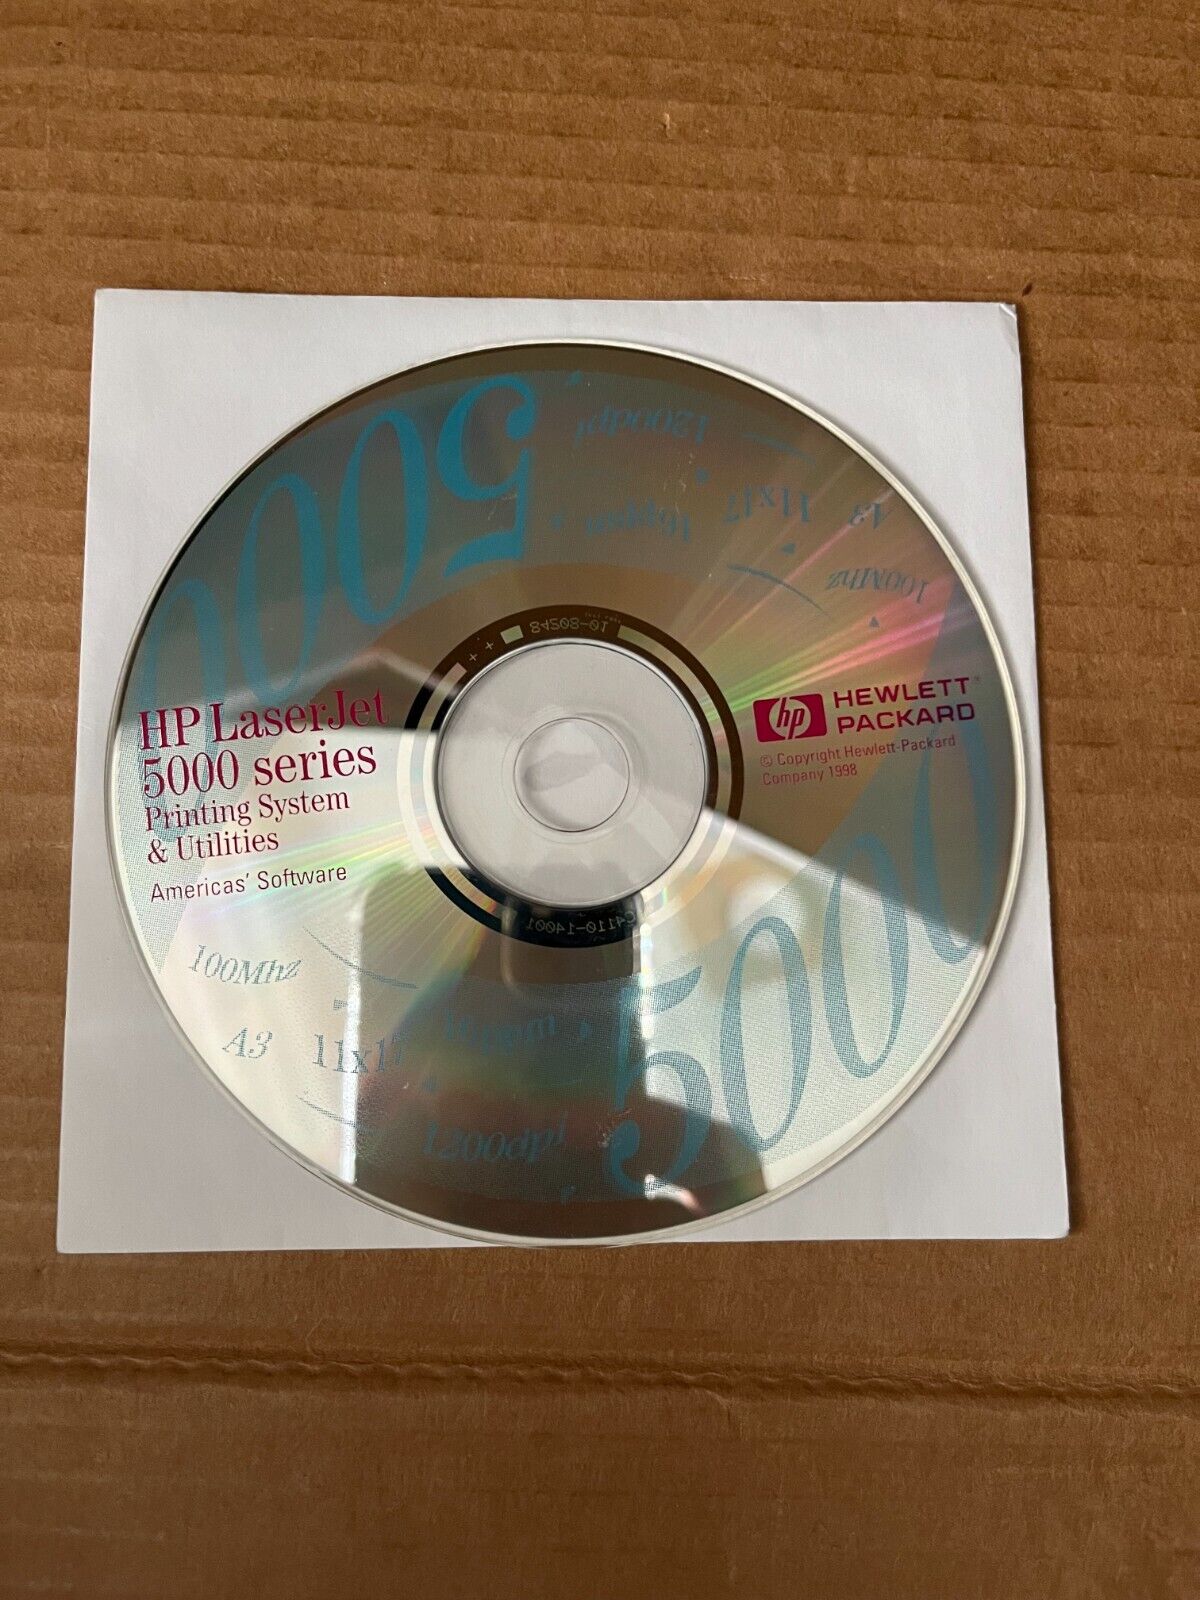 HP LaserJet 5000 Series Printing System & Utilities CD-ROM for Windows & OS/2